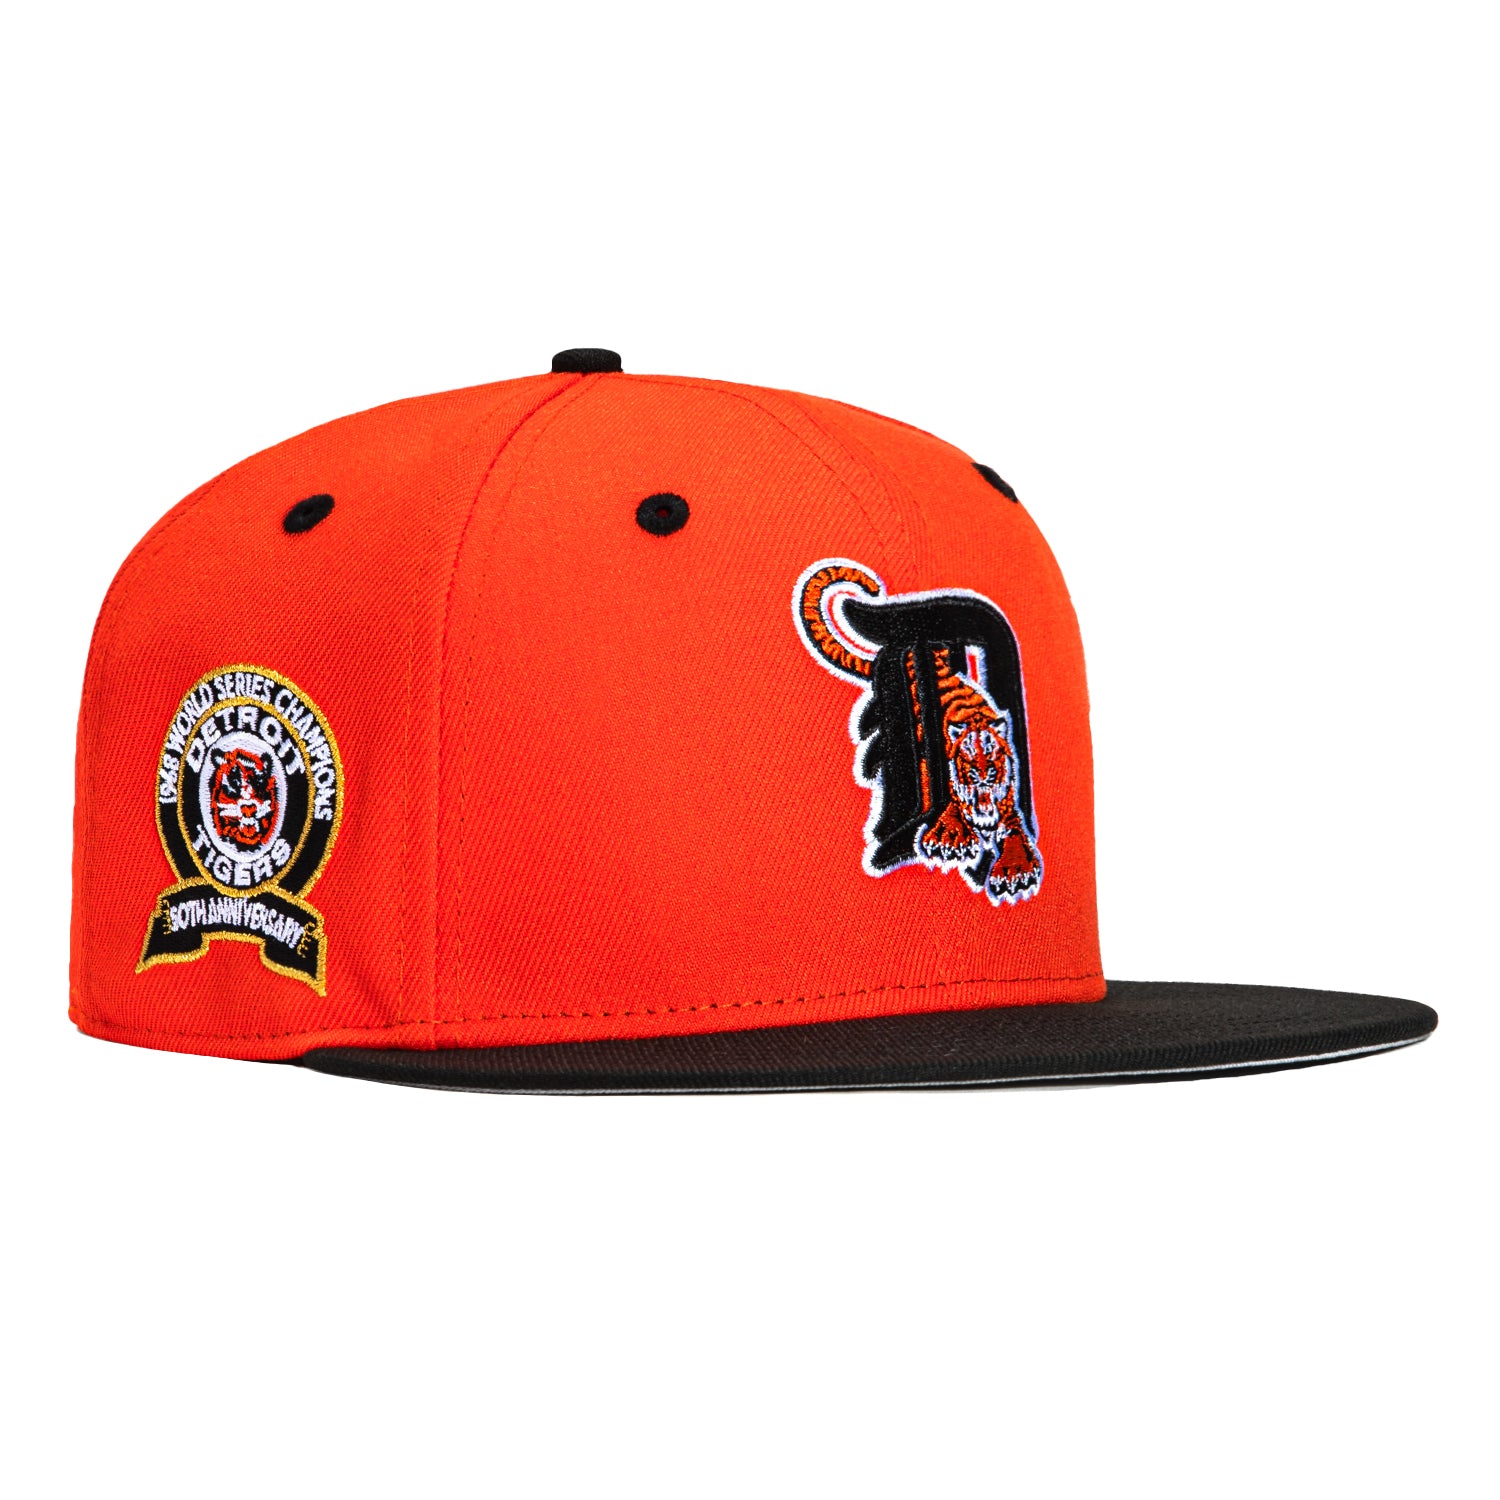 New Era 59FIFTY Detroit Tigers 50th Anniversary Champions Patch Hat - Orange, Black Orange/Black / 7